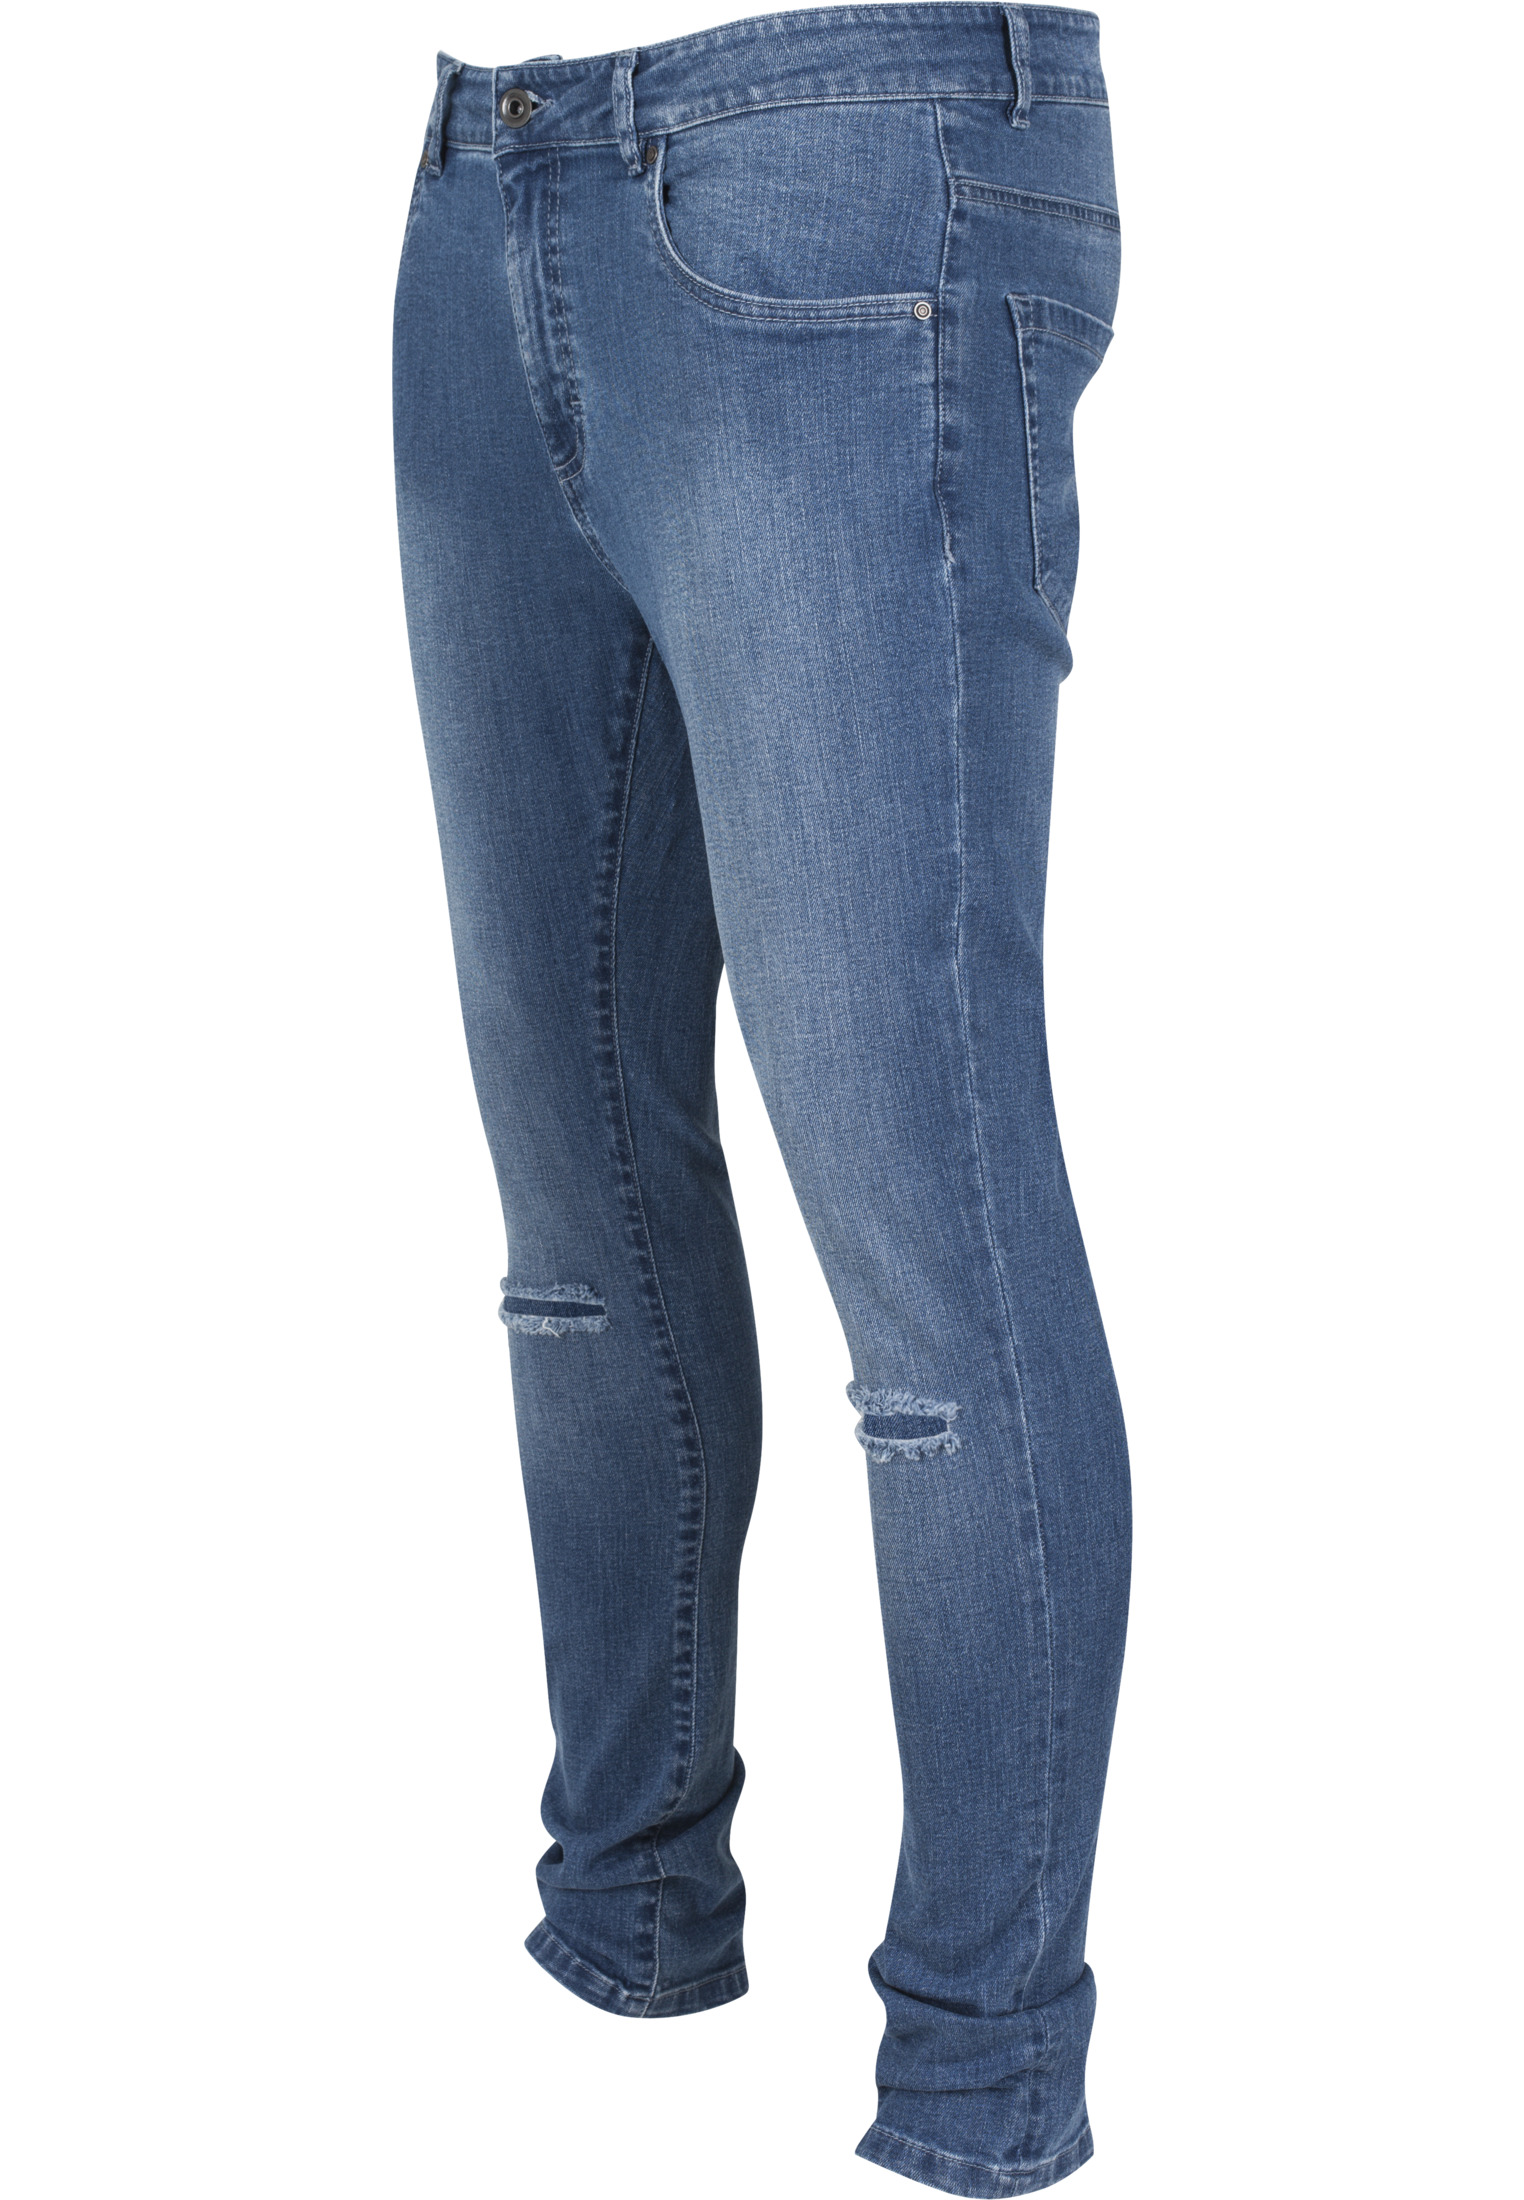 Hosen Slim Fit Knee Cut Denim Pants in Farbe blue washed